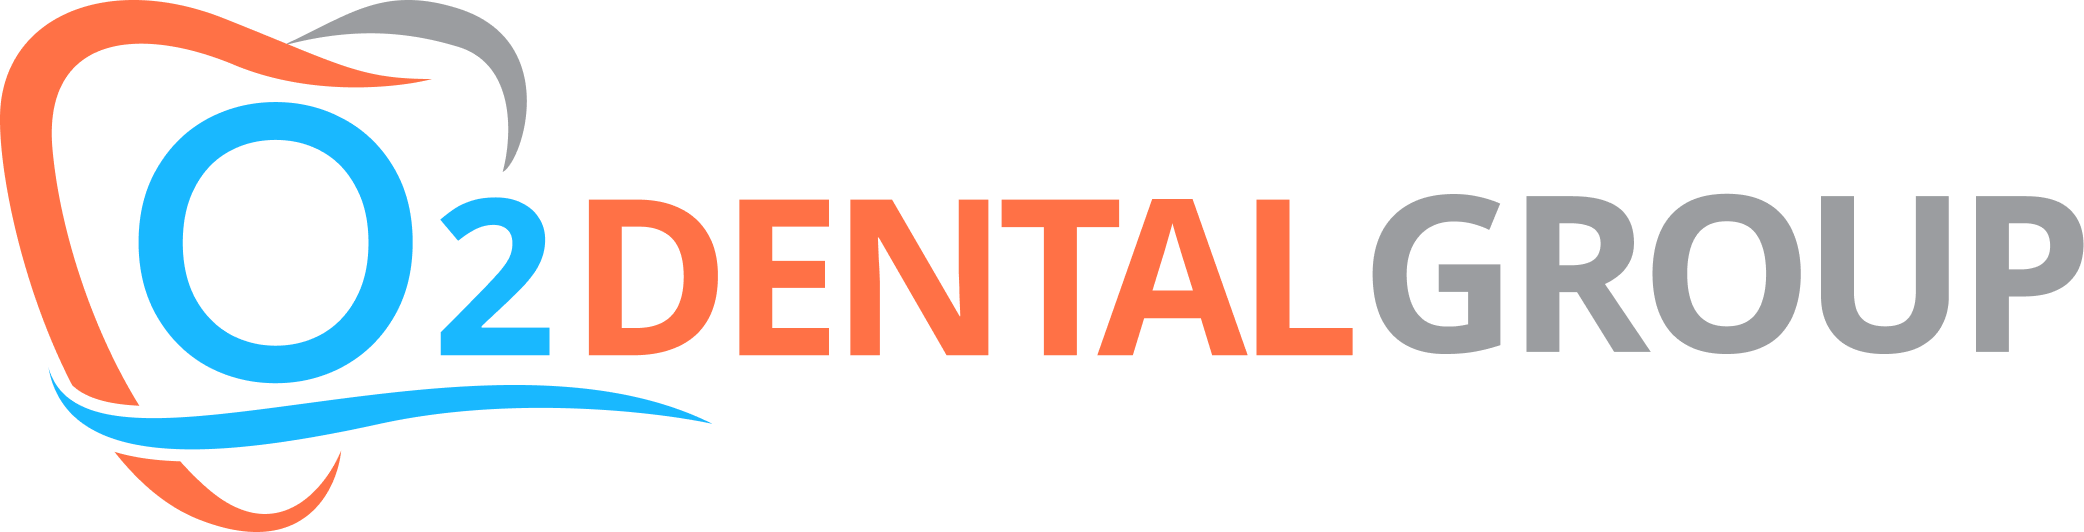 O2 Dental Group of Raleigh - logo